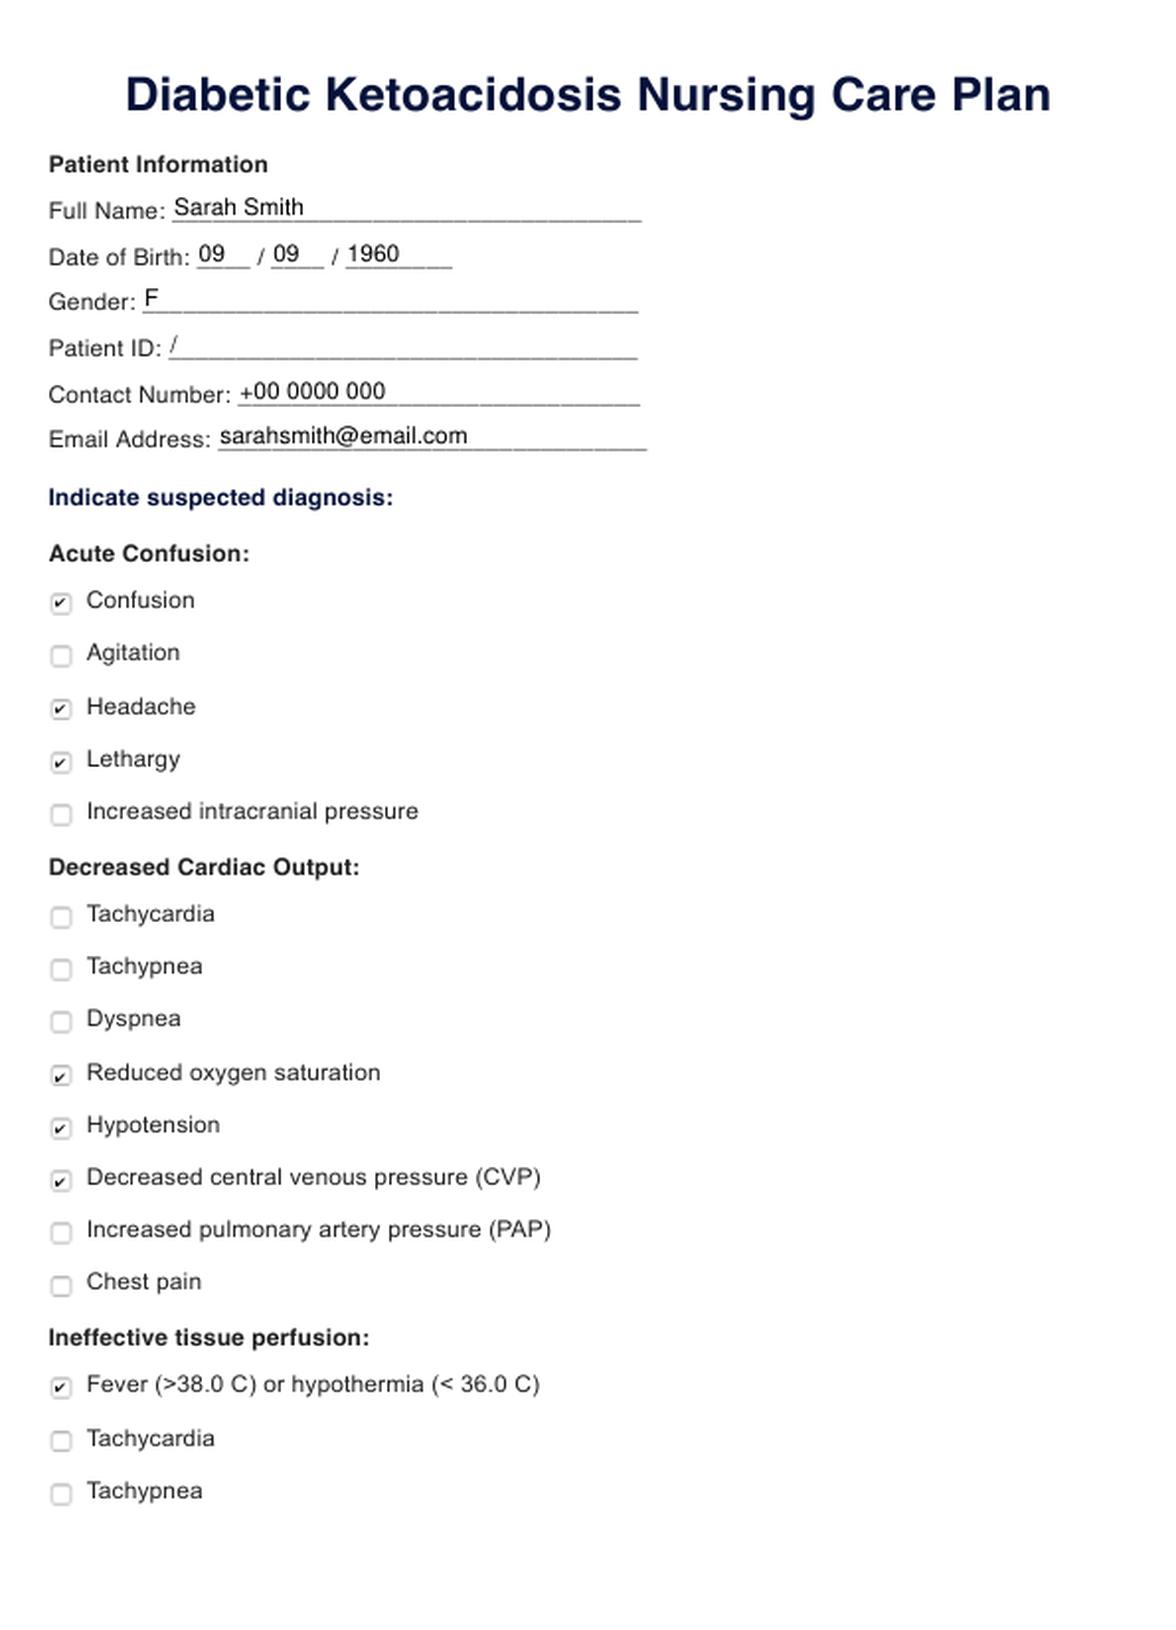 DKA Nursing Care Plan PDF Example